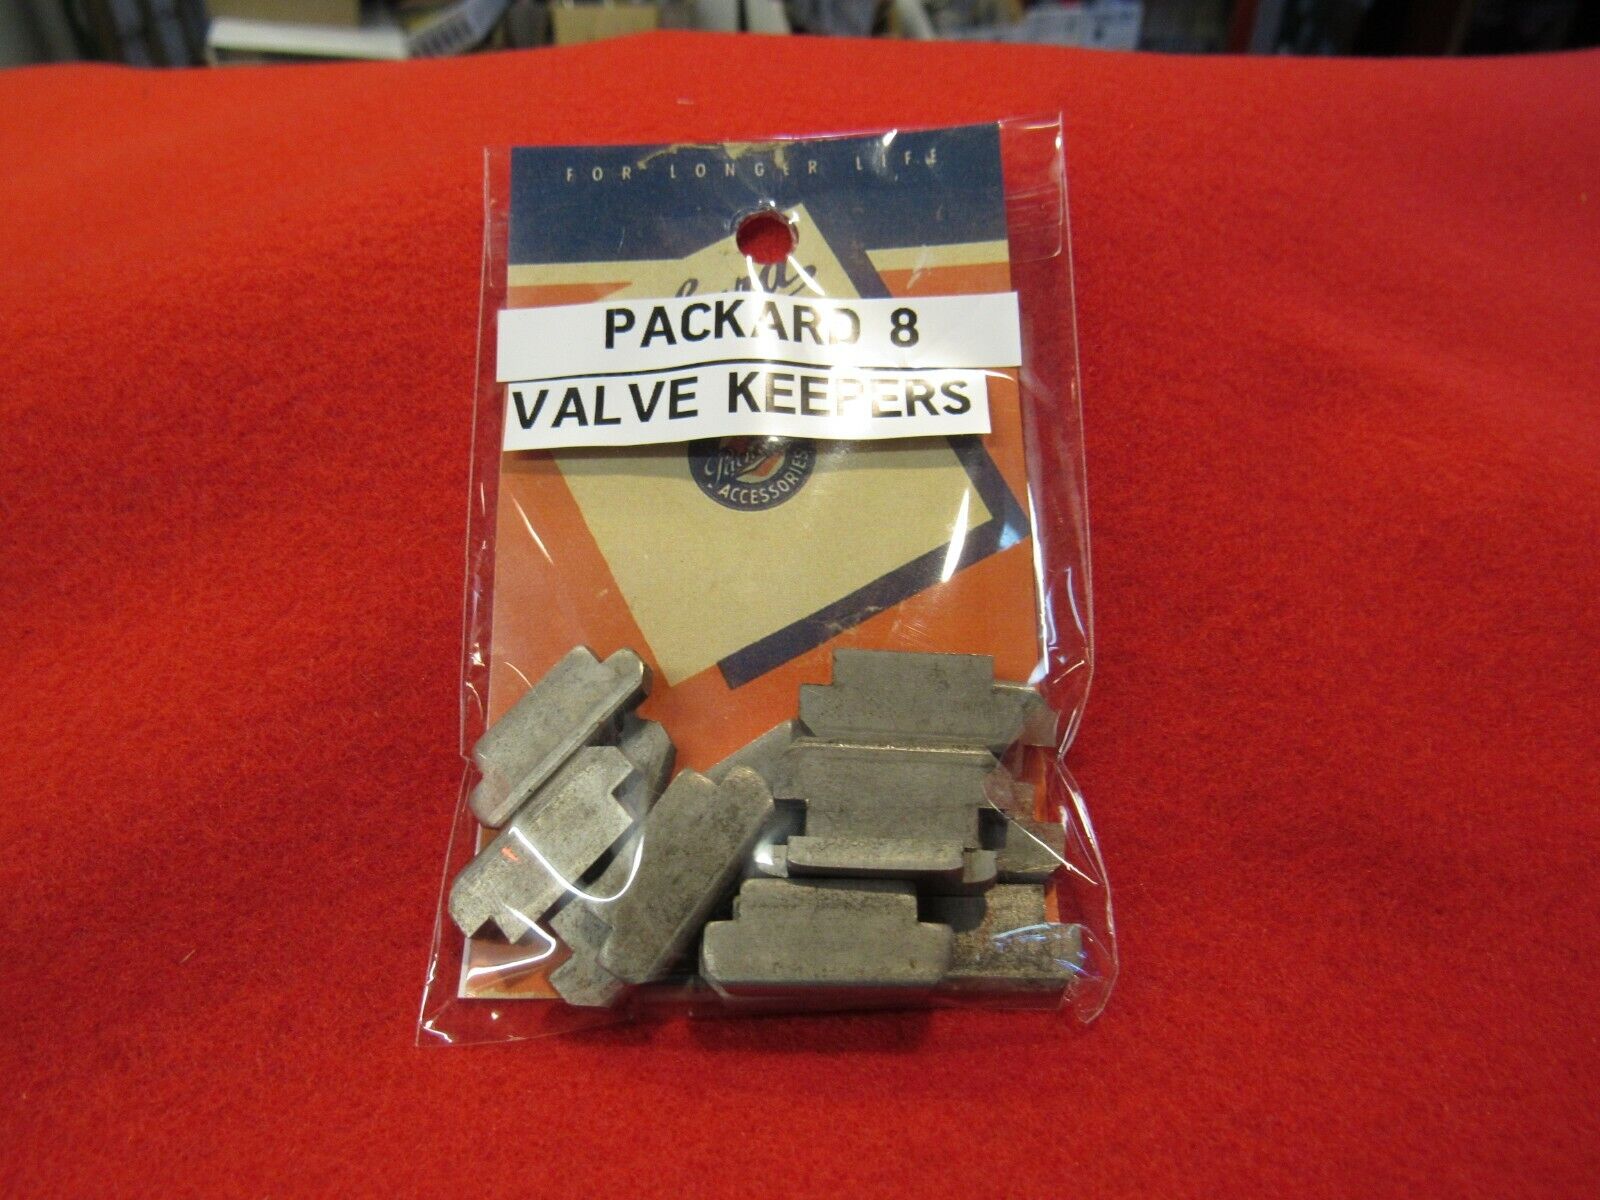 Packard Eight valve keepers